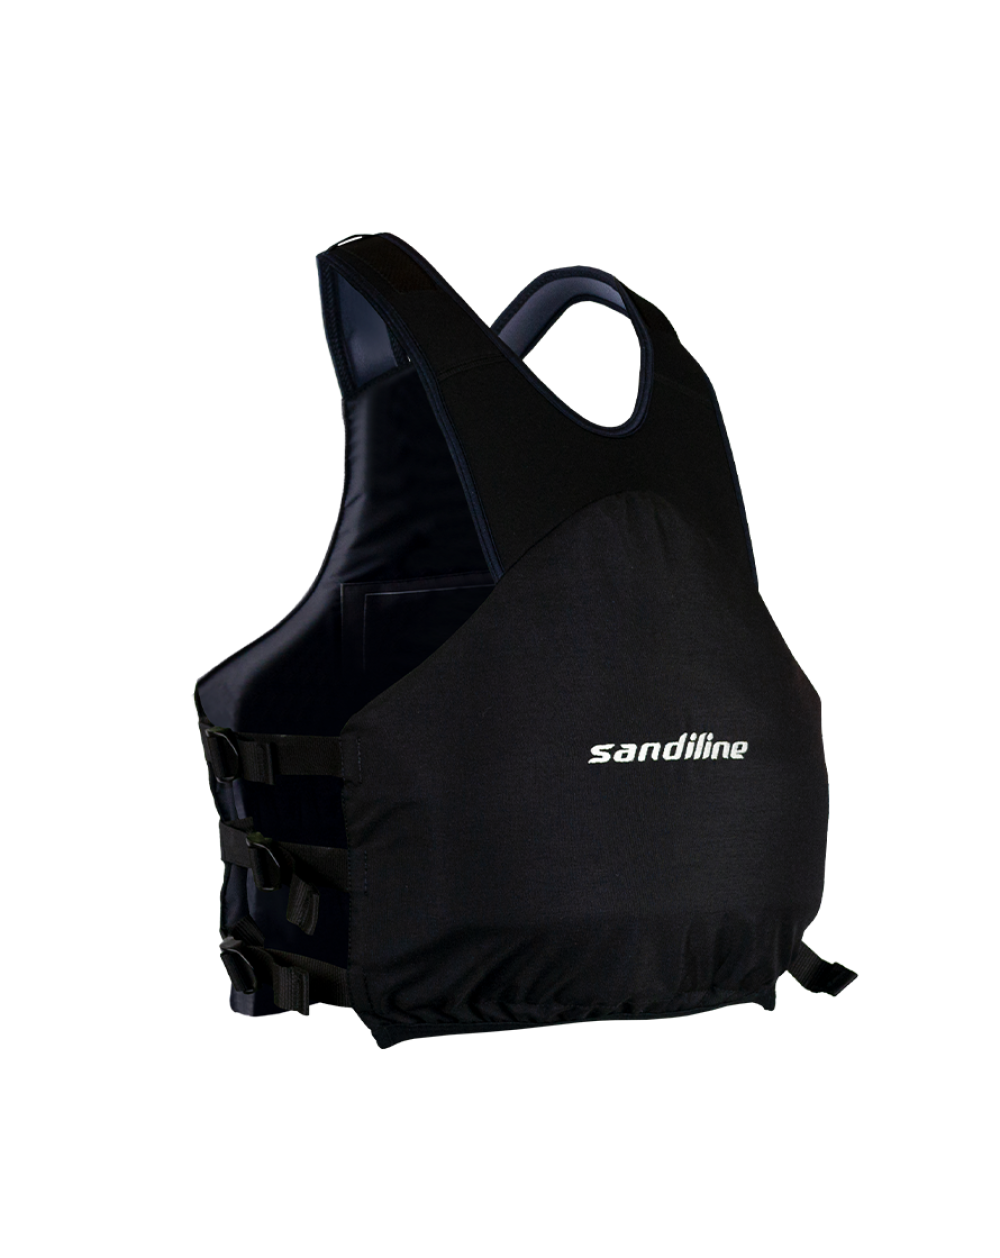 SANDILINE Schwimmweste PFD Pro Life Jacket - XL/2XL